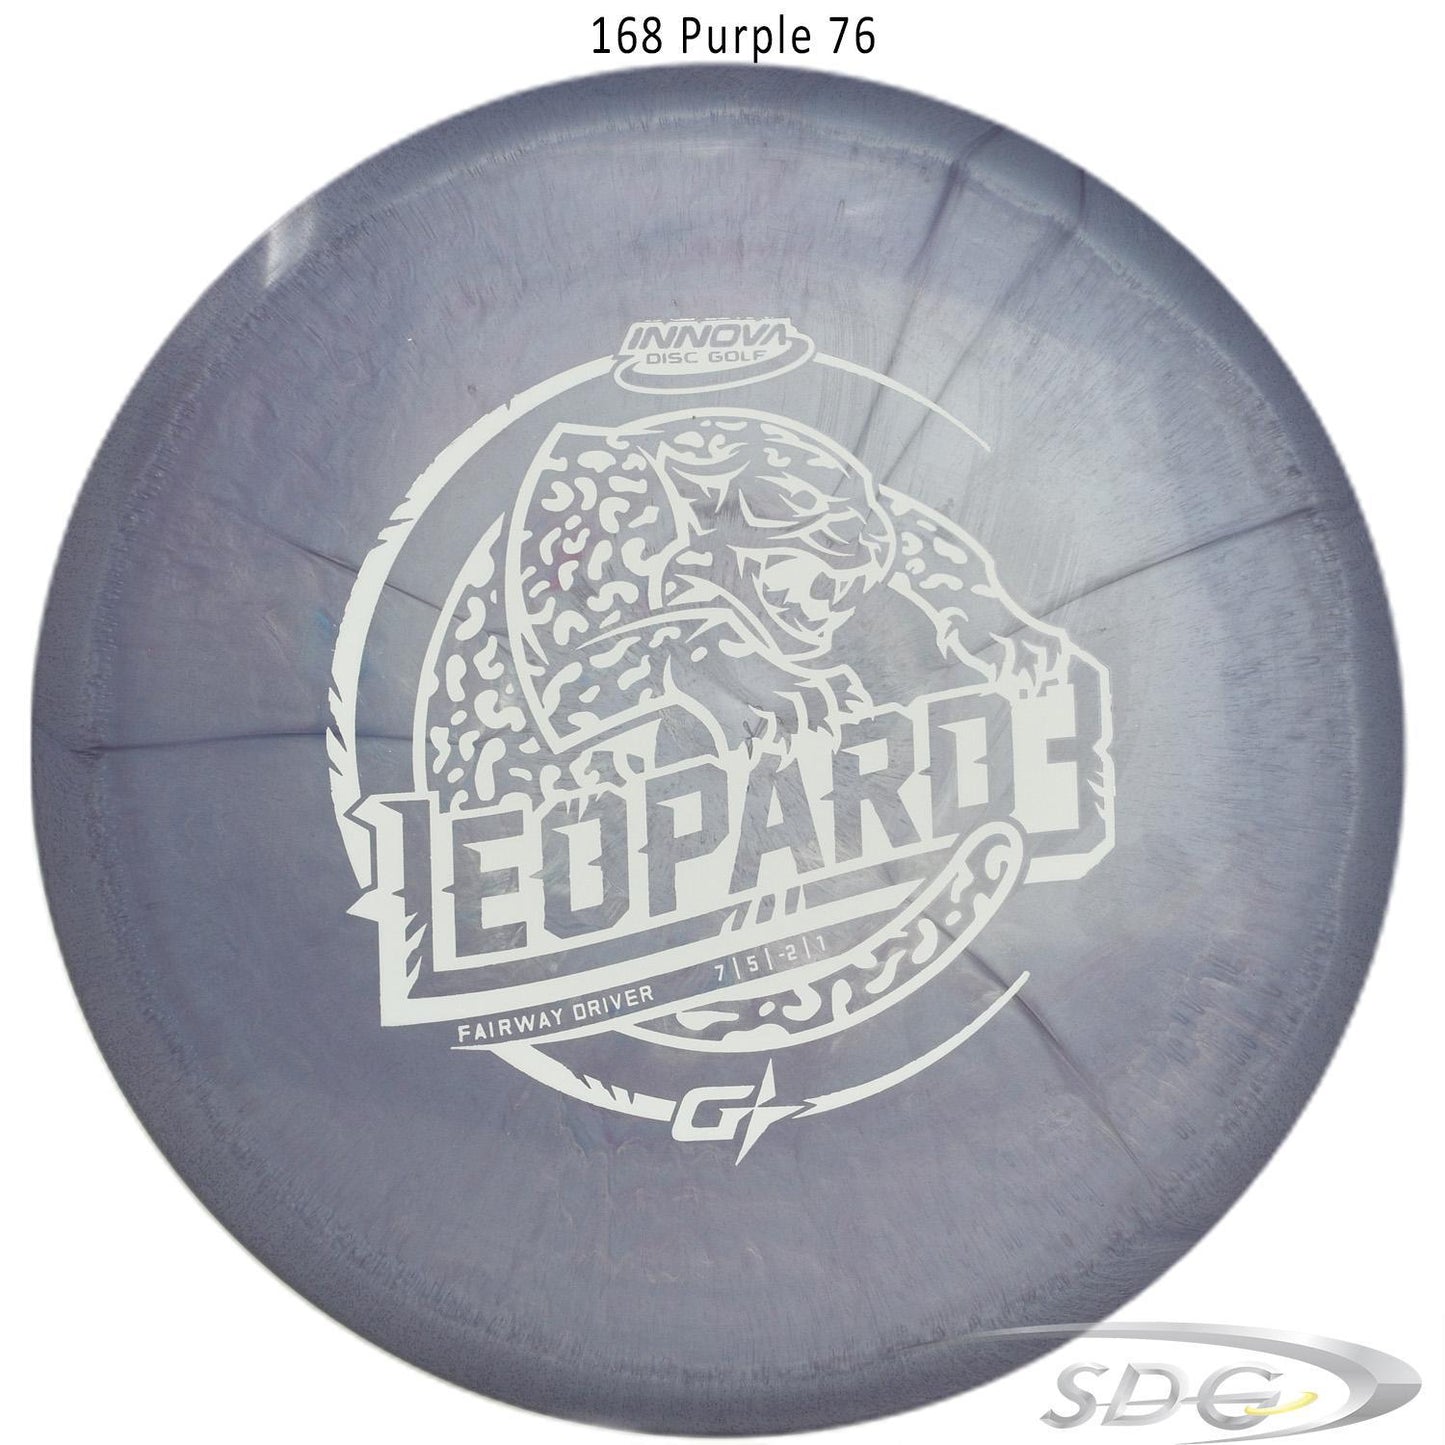 innova-gstar-leopard3-disc-golf-fairway-driver 168 Purple 76 